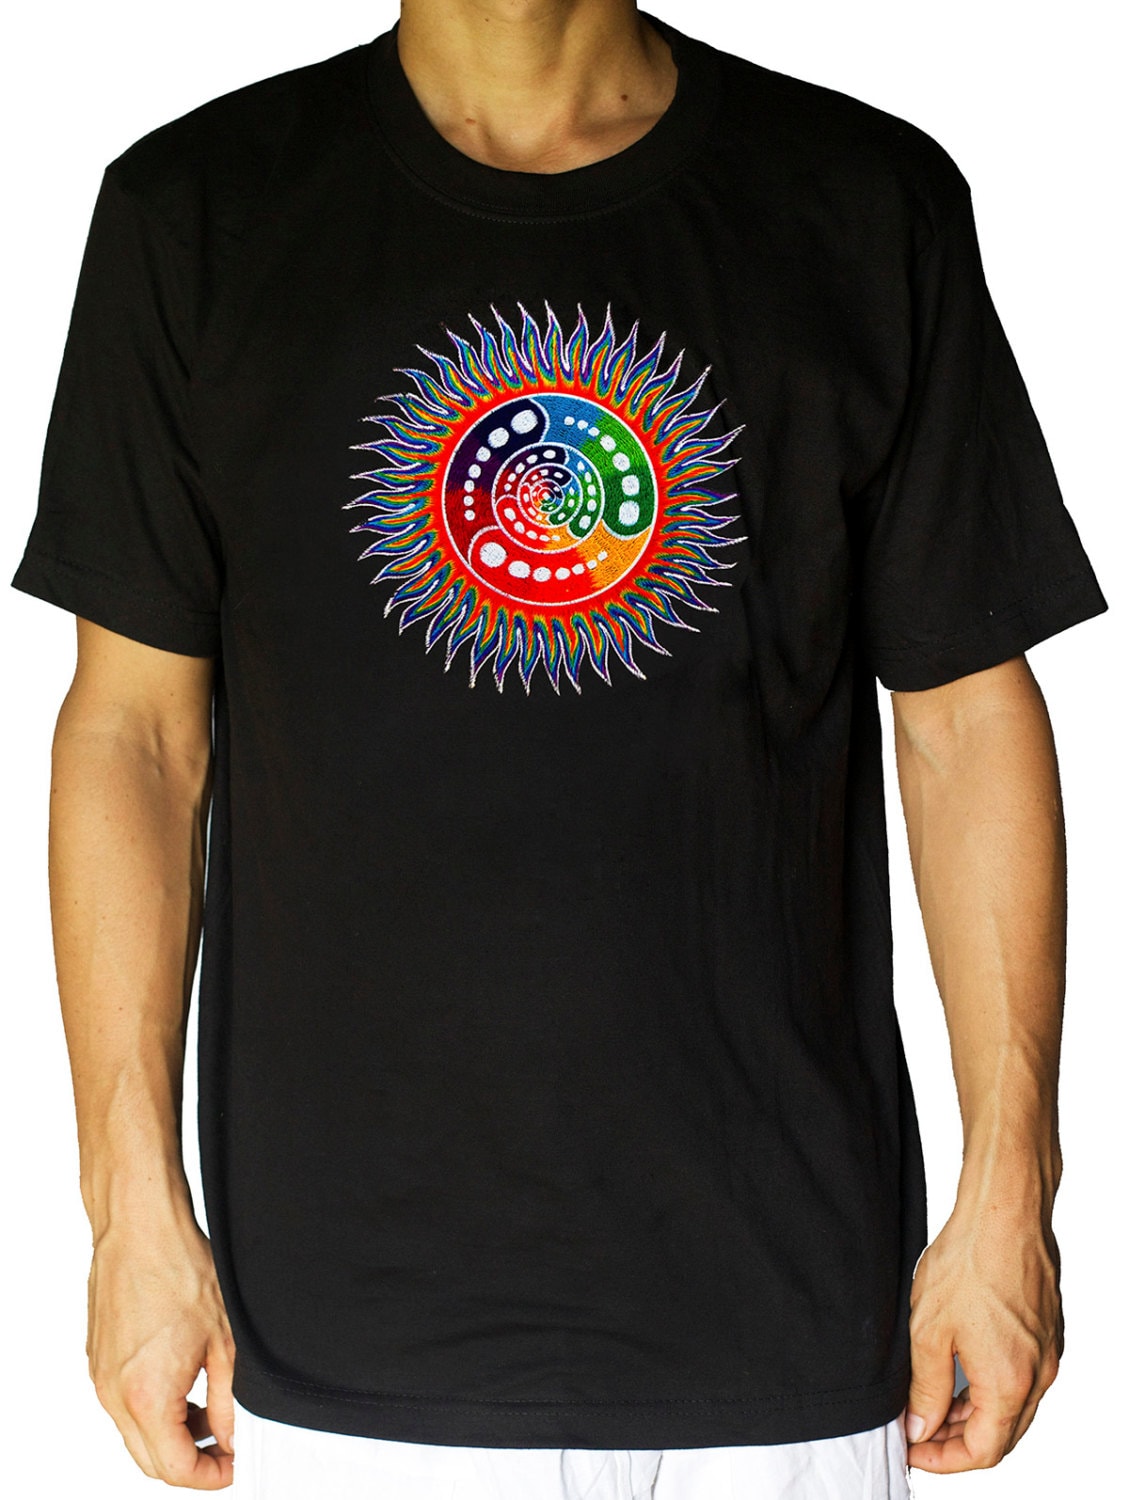 Attributes cropcircle Shirt rainbow fractal mandala blacklight handmade embroidery no print goa t-shirt